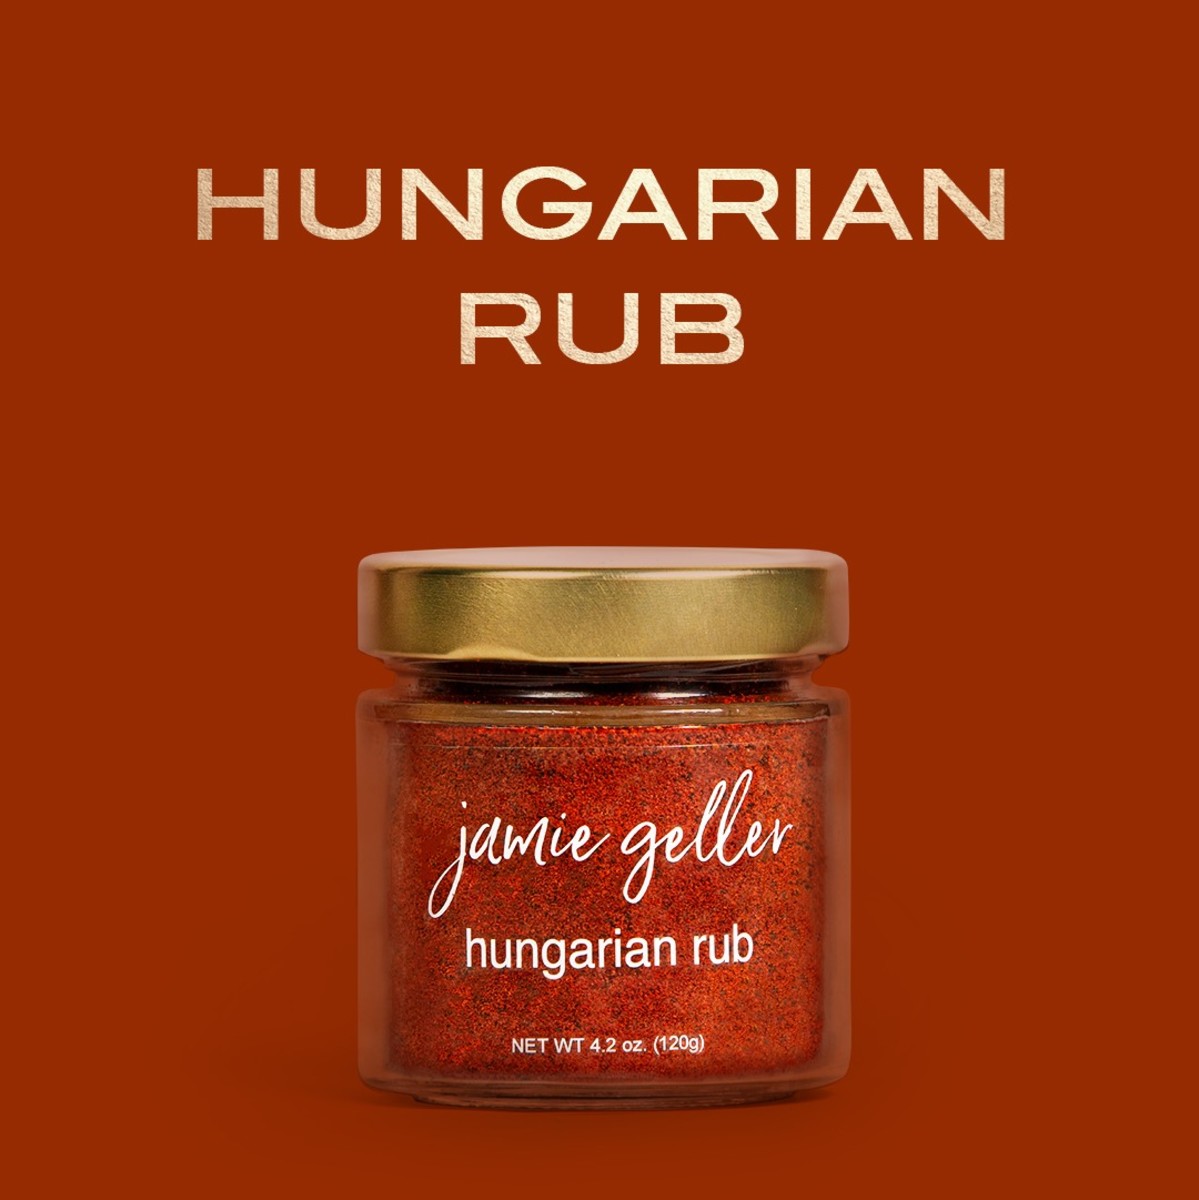 Hungarian rub